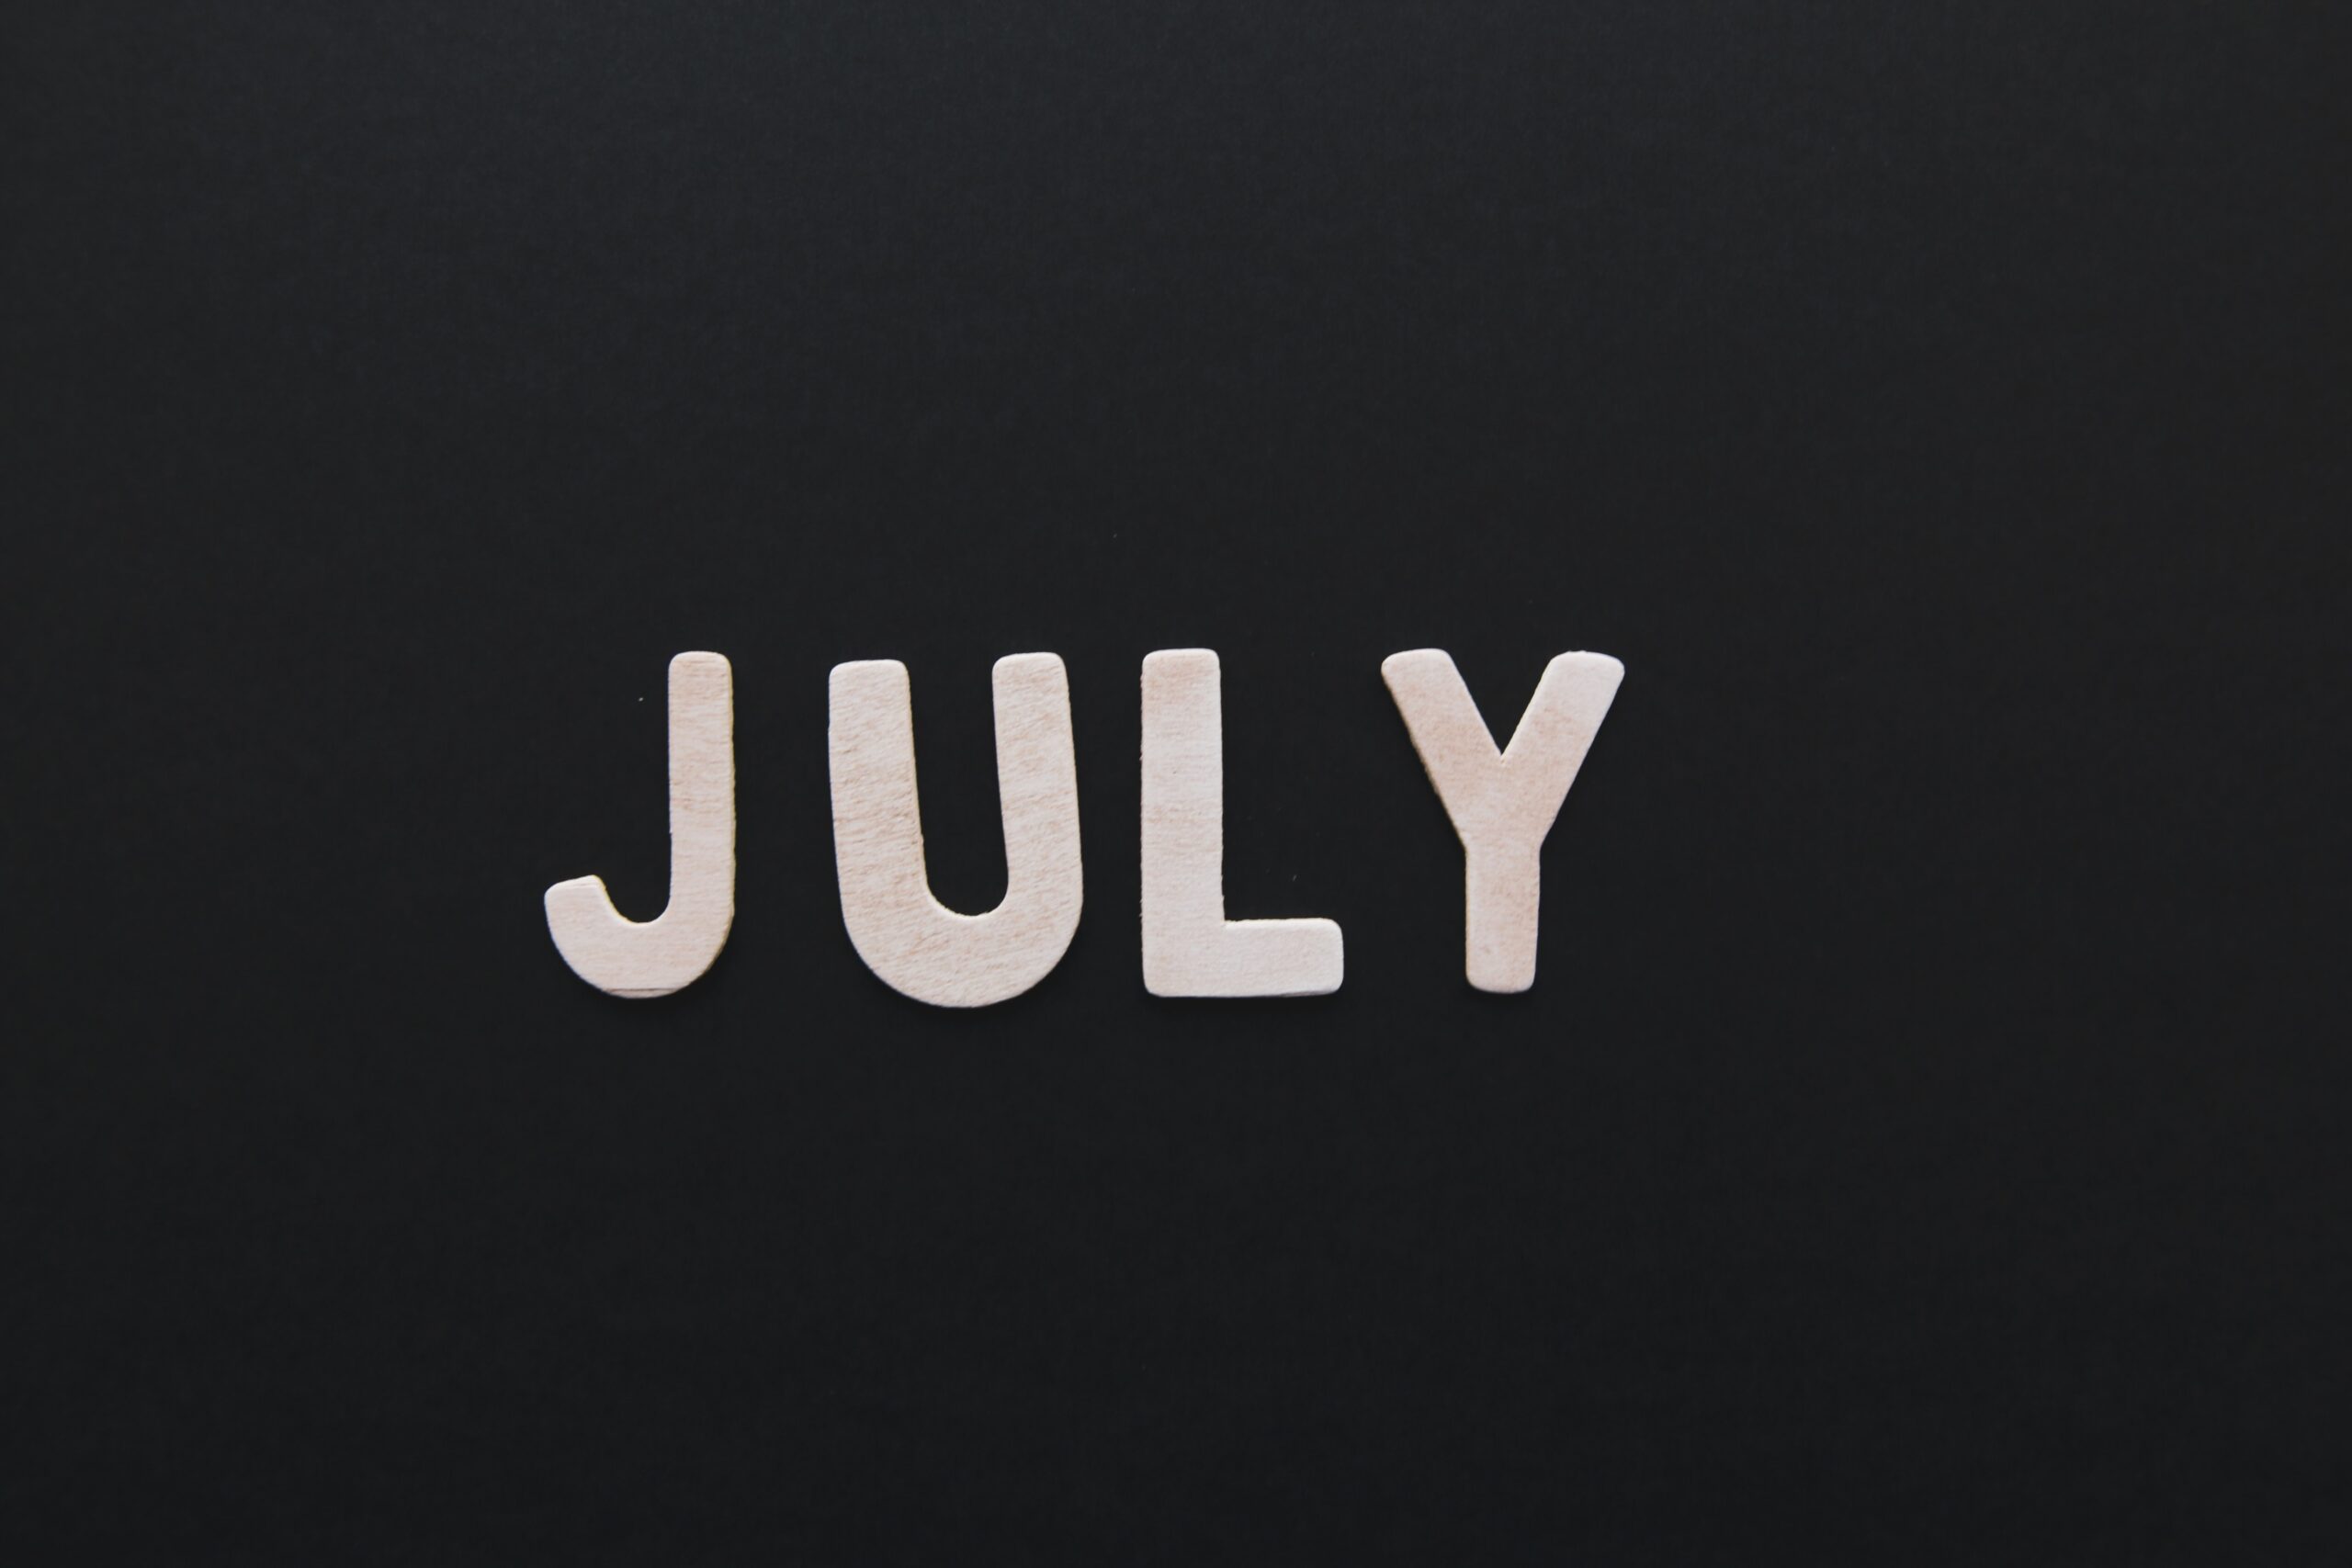 Oh hey, July!